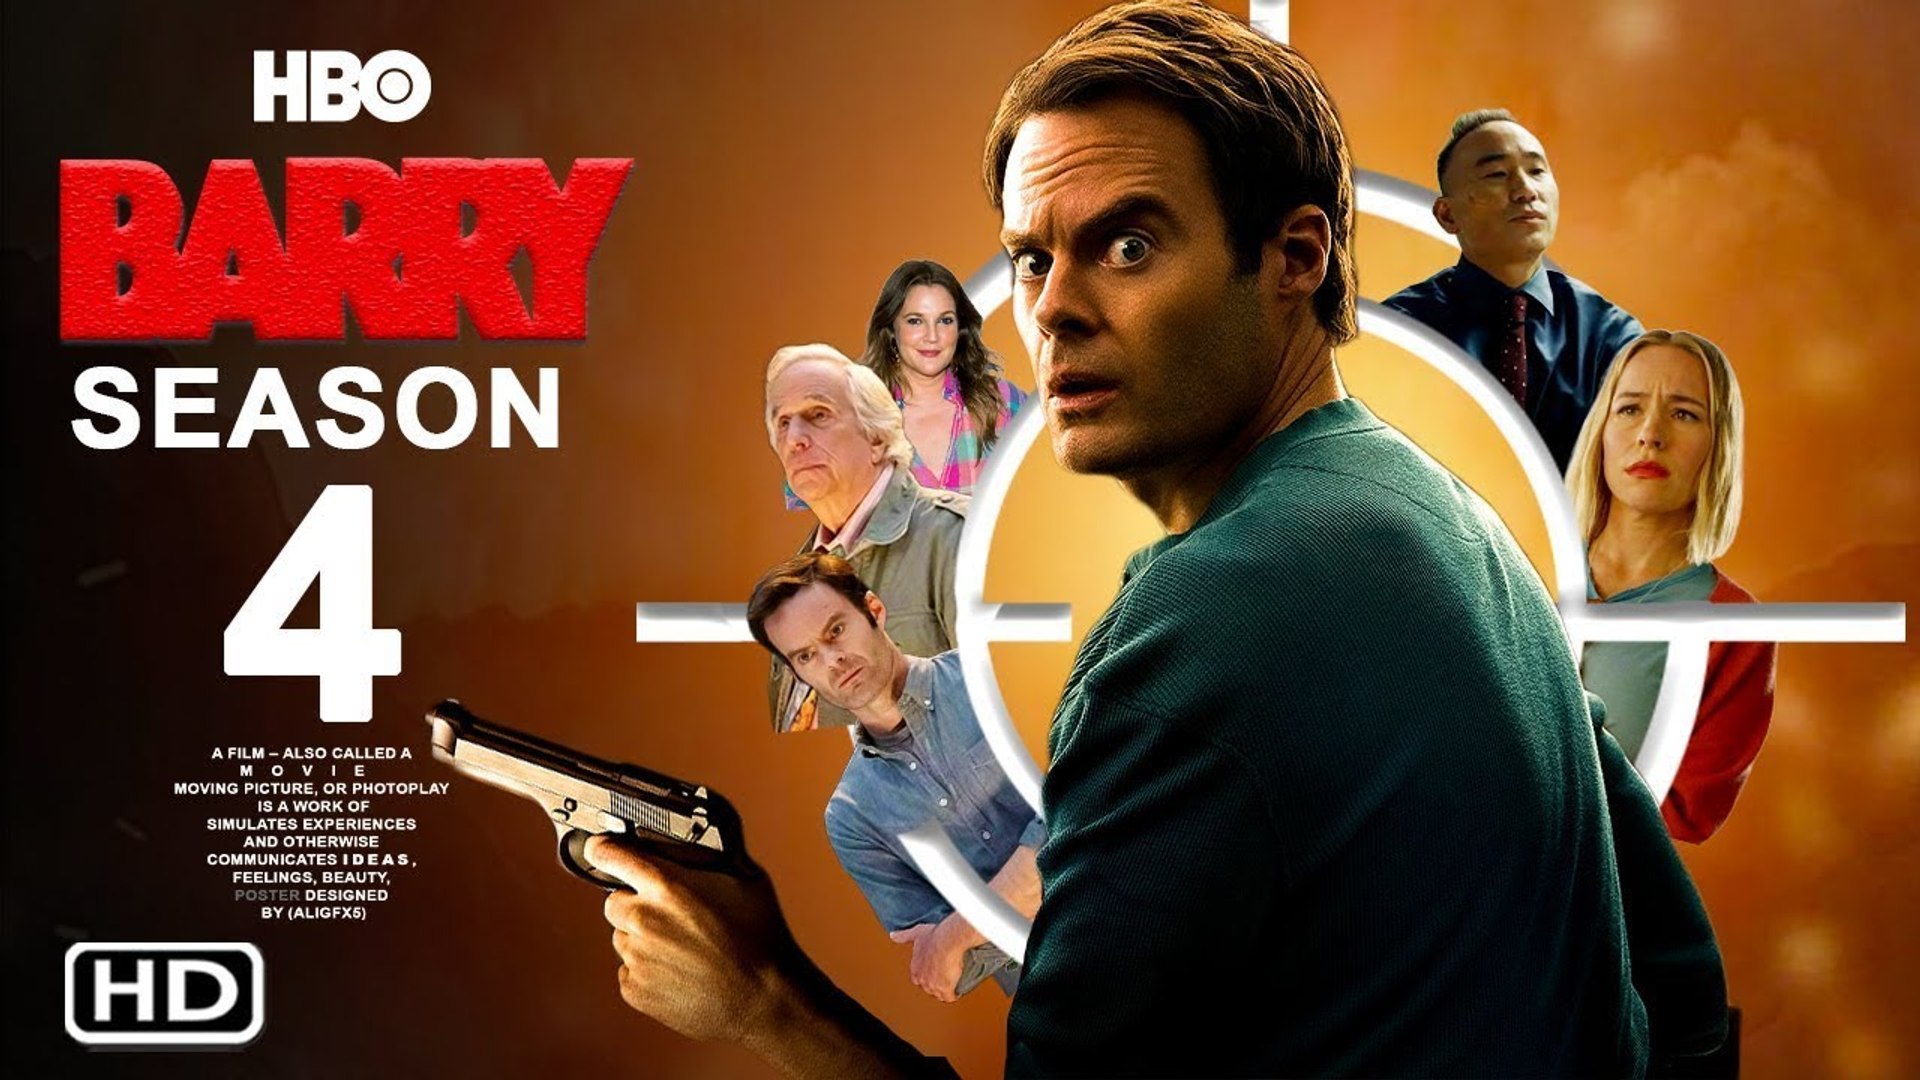 Barry Season 4 Trailer - HBO, Bill Hader, Sarah Goldberg - video Dailymotion